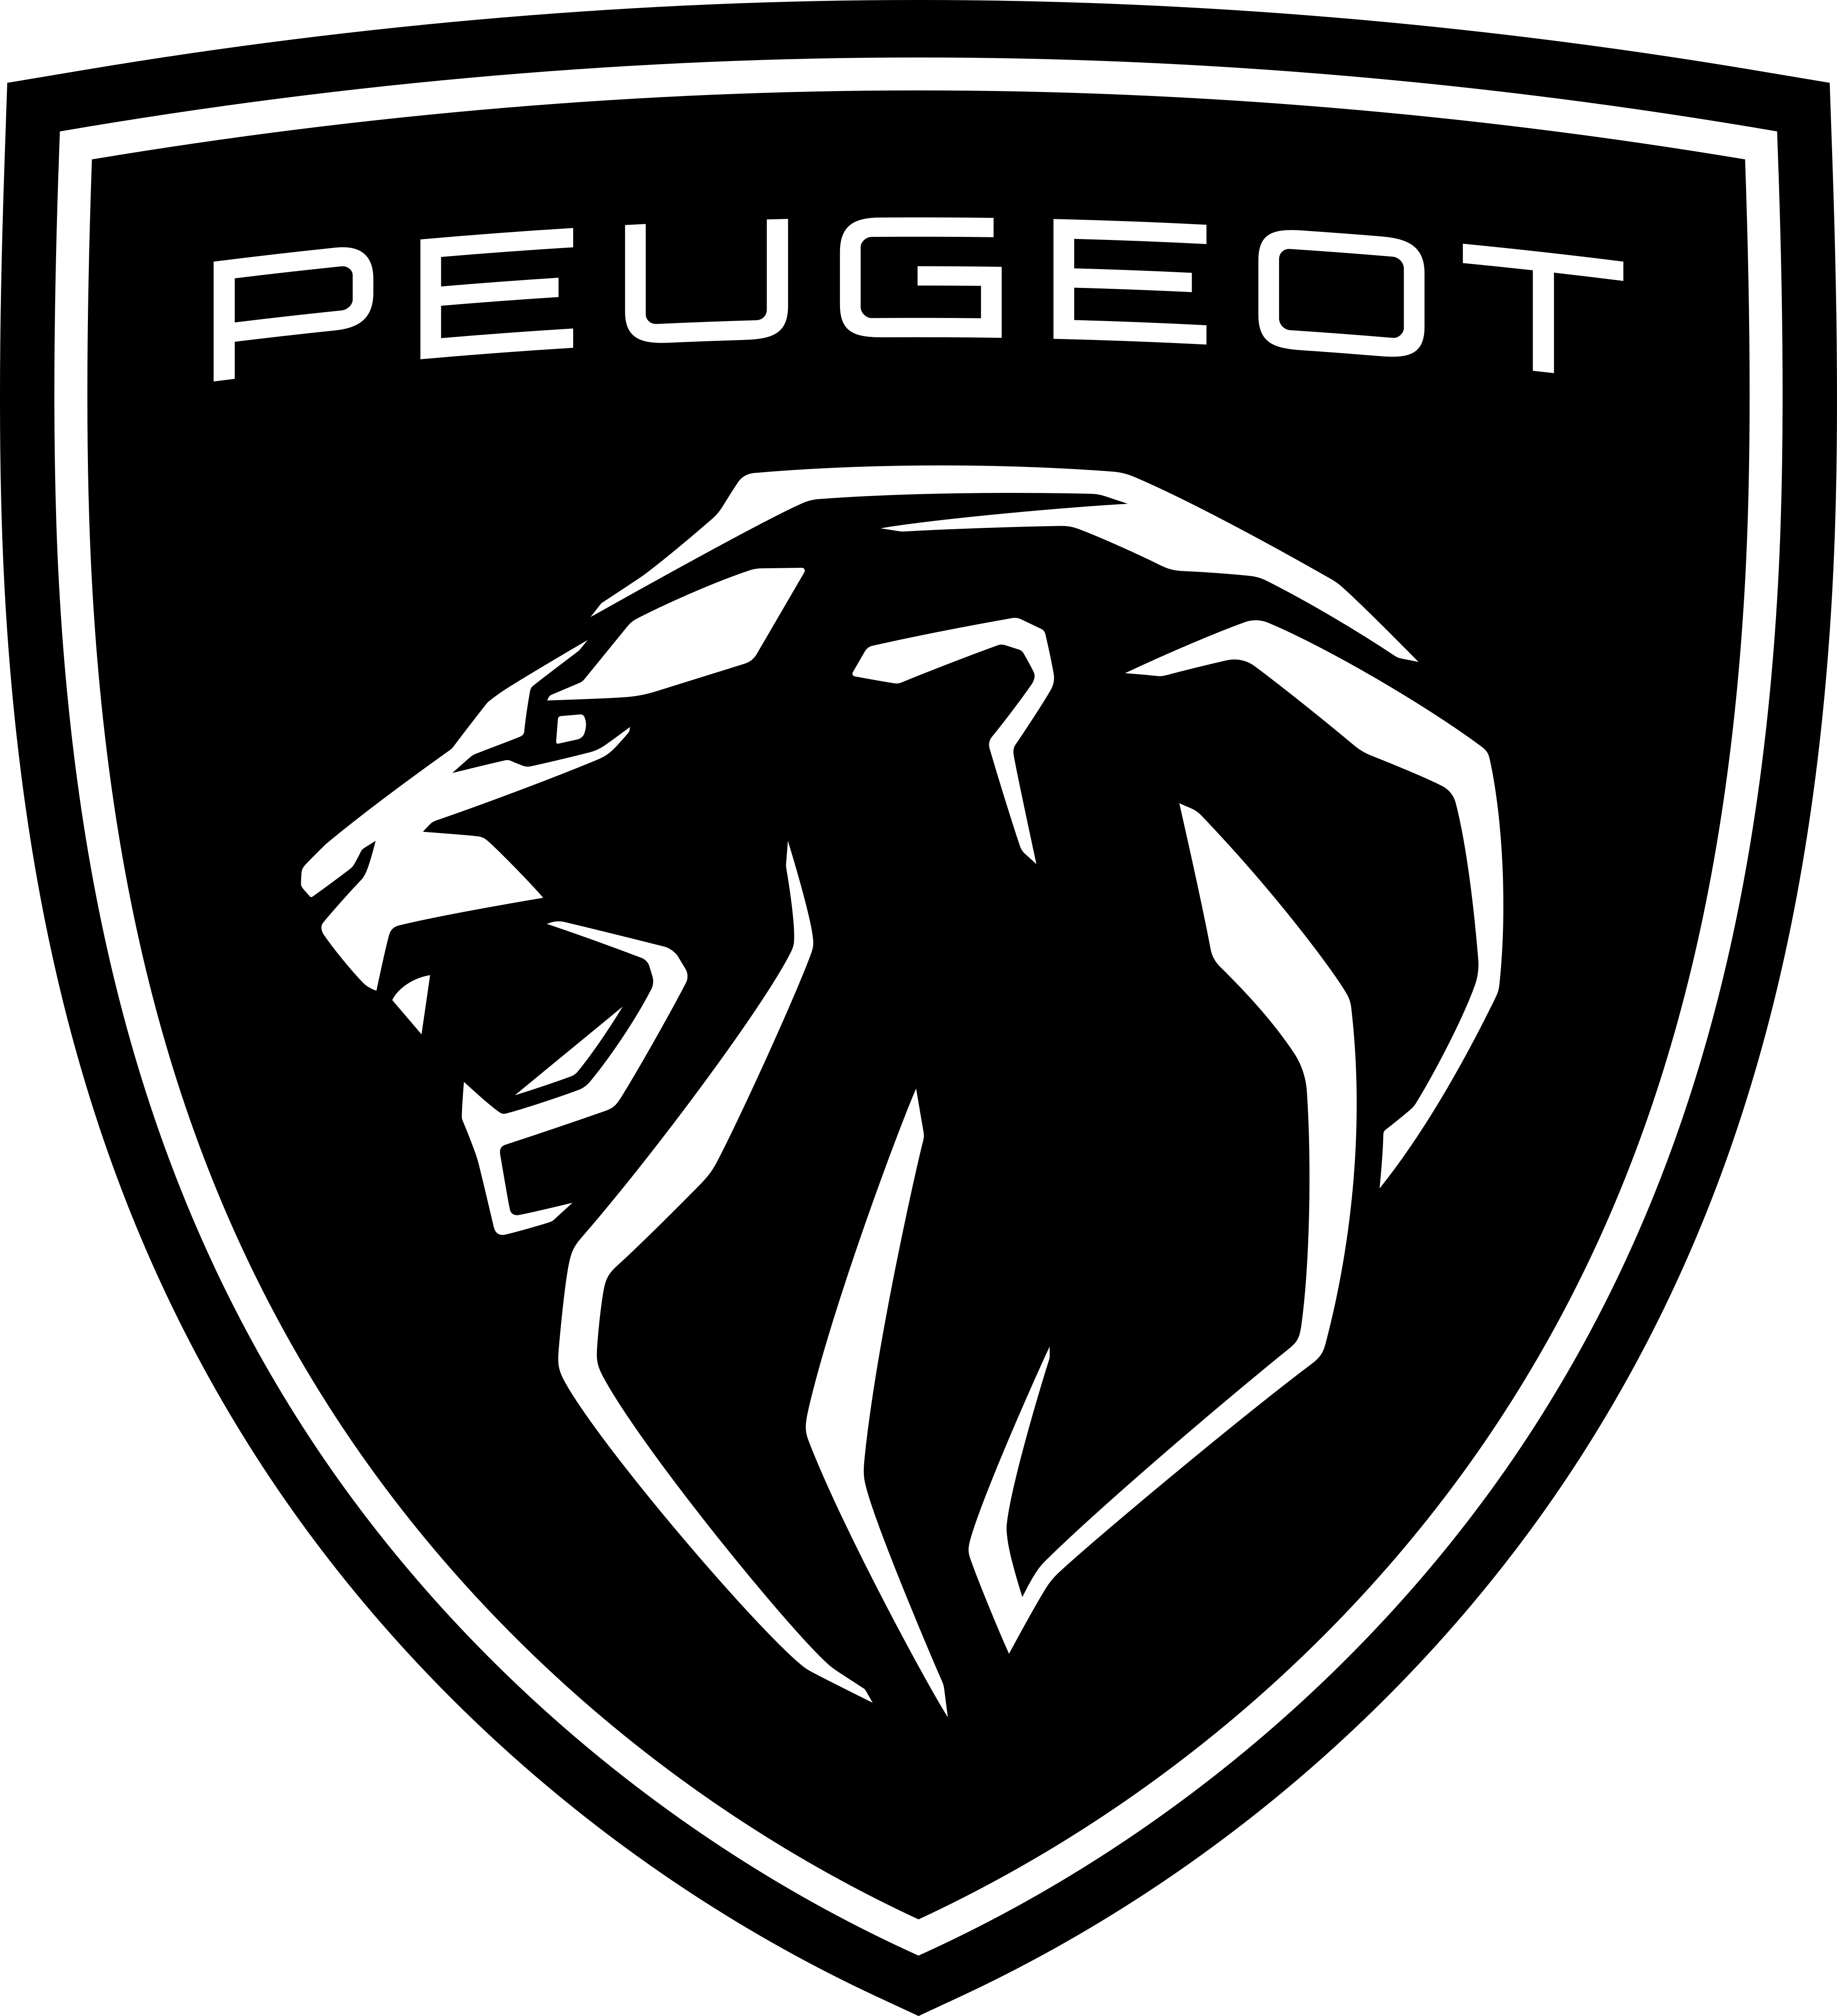 Peugeot logo 5